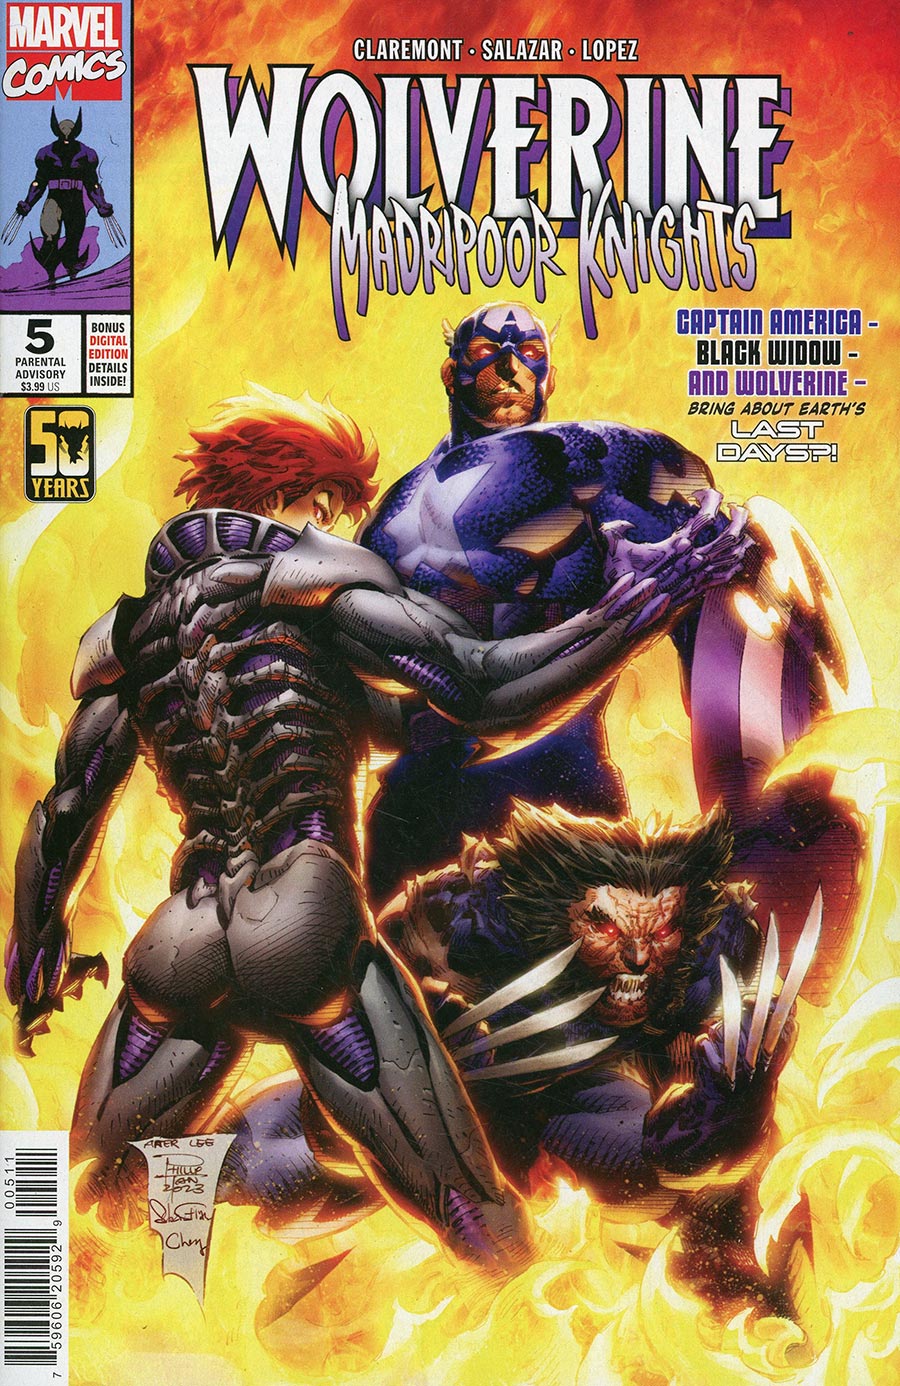 Wolverine Madripoor Knights #5